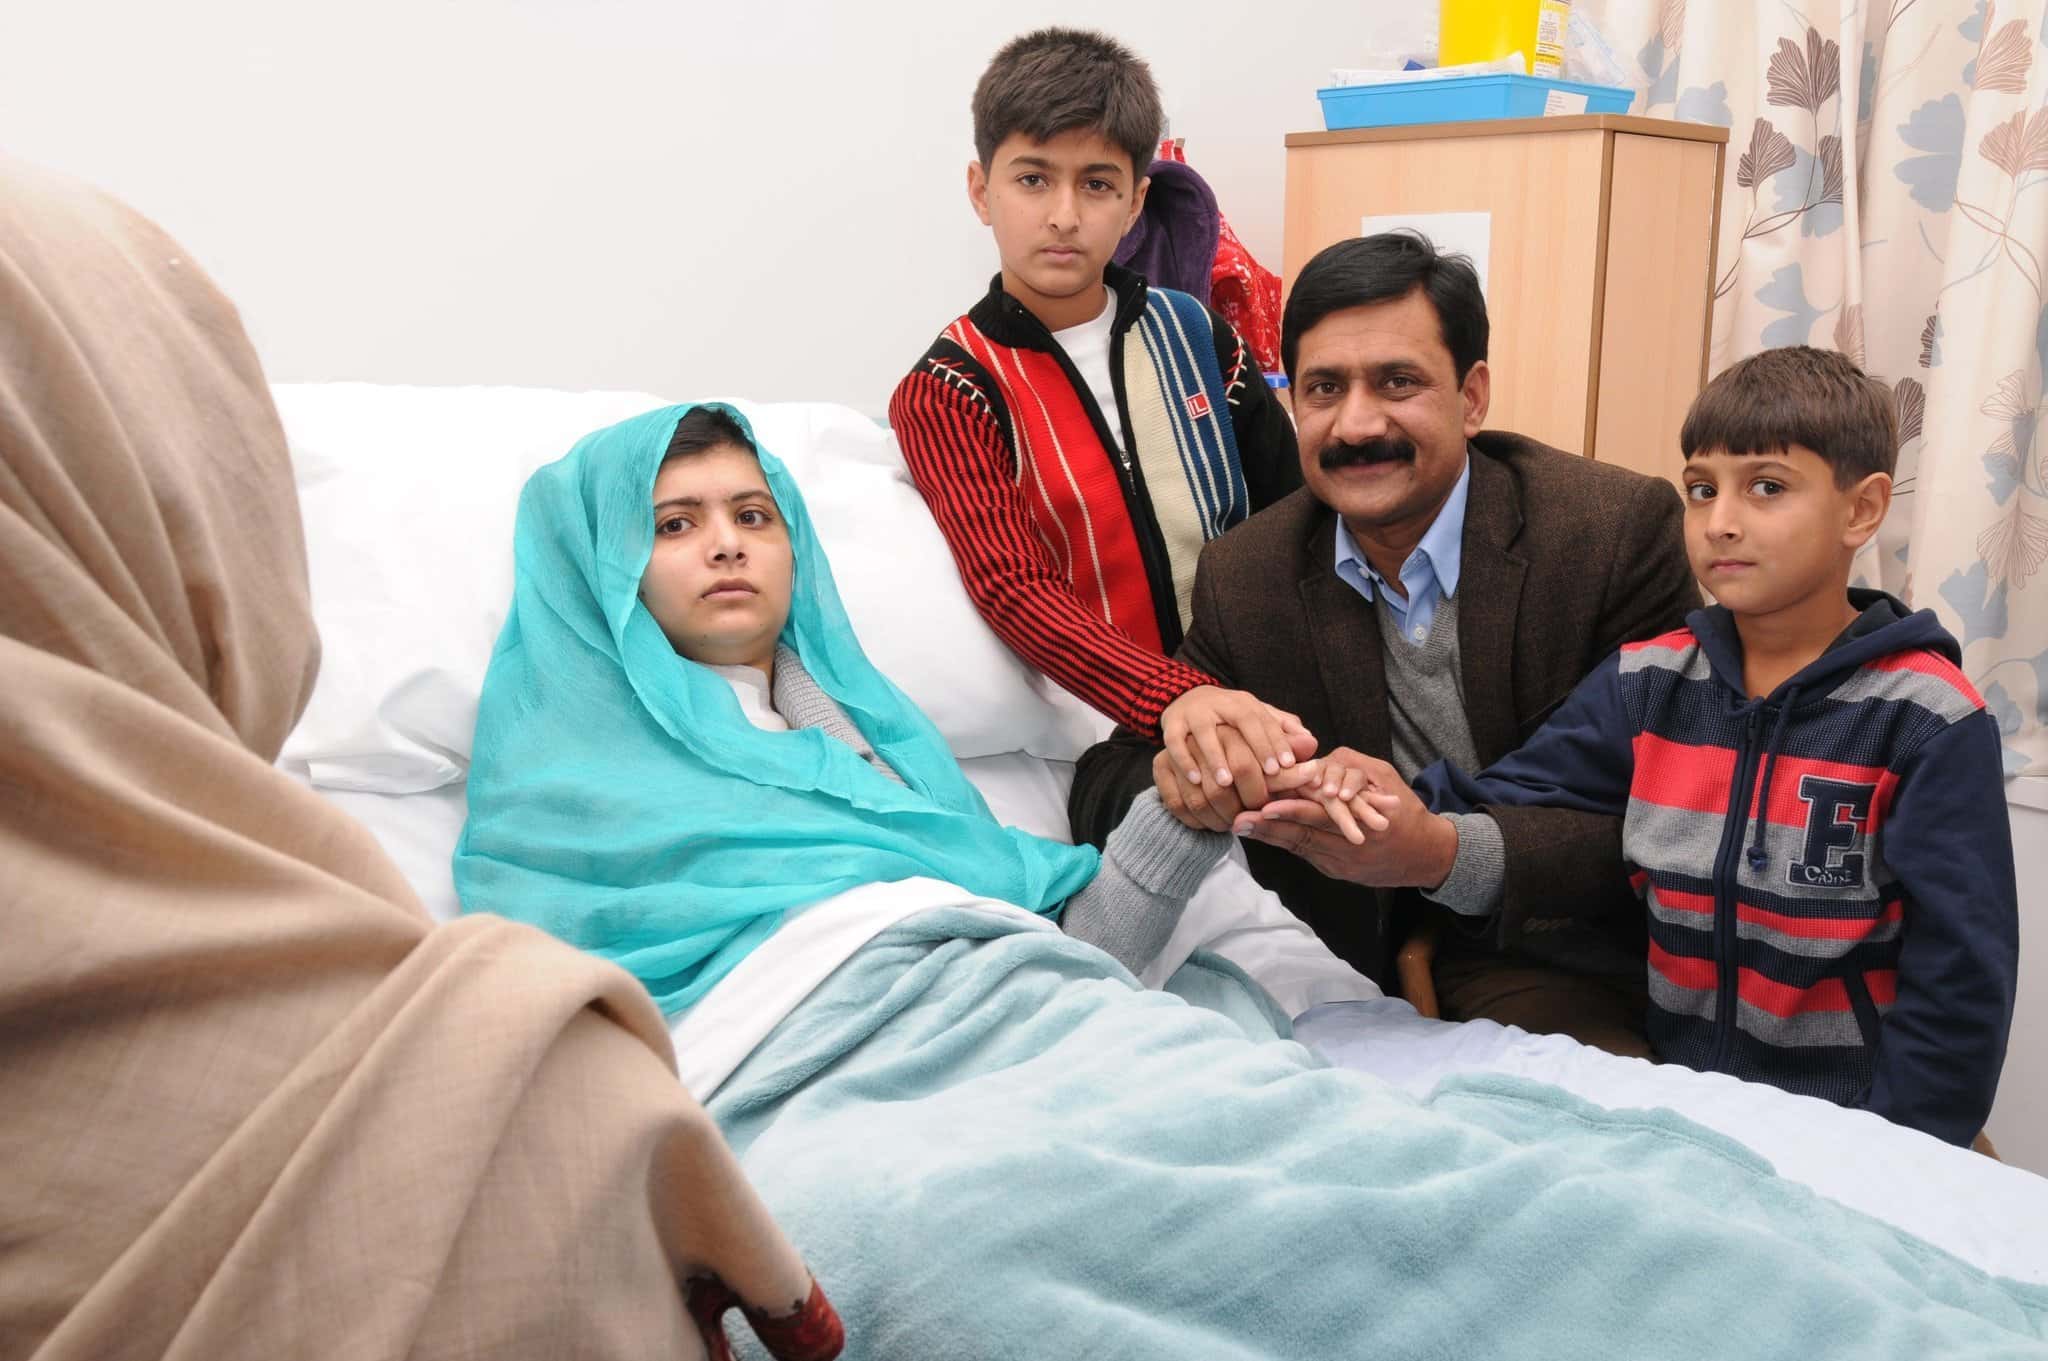 Malala Yousafzai facts 